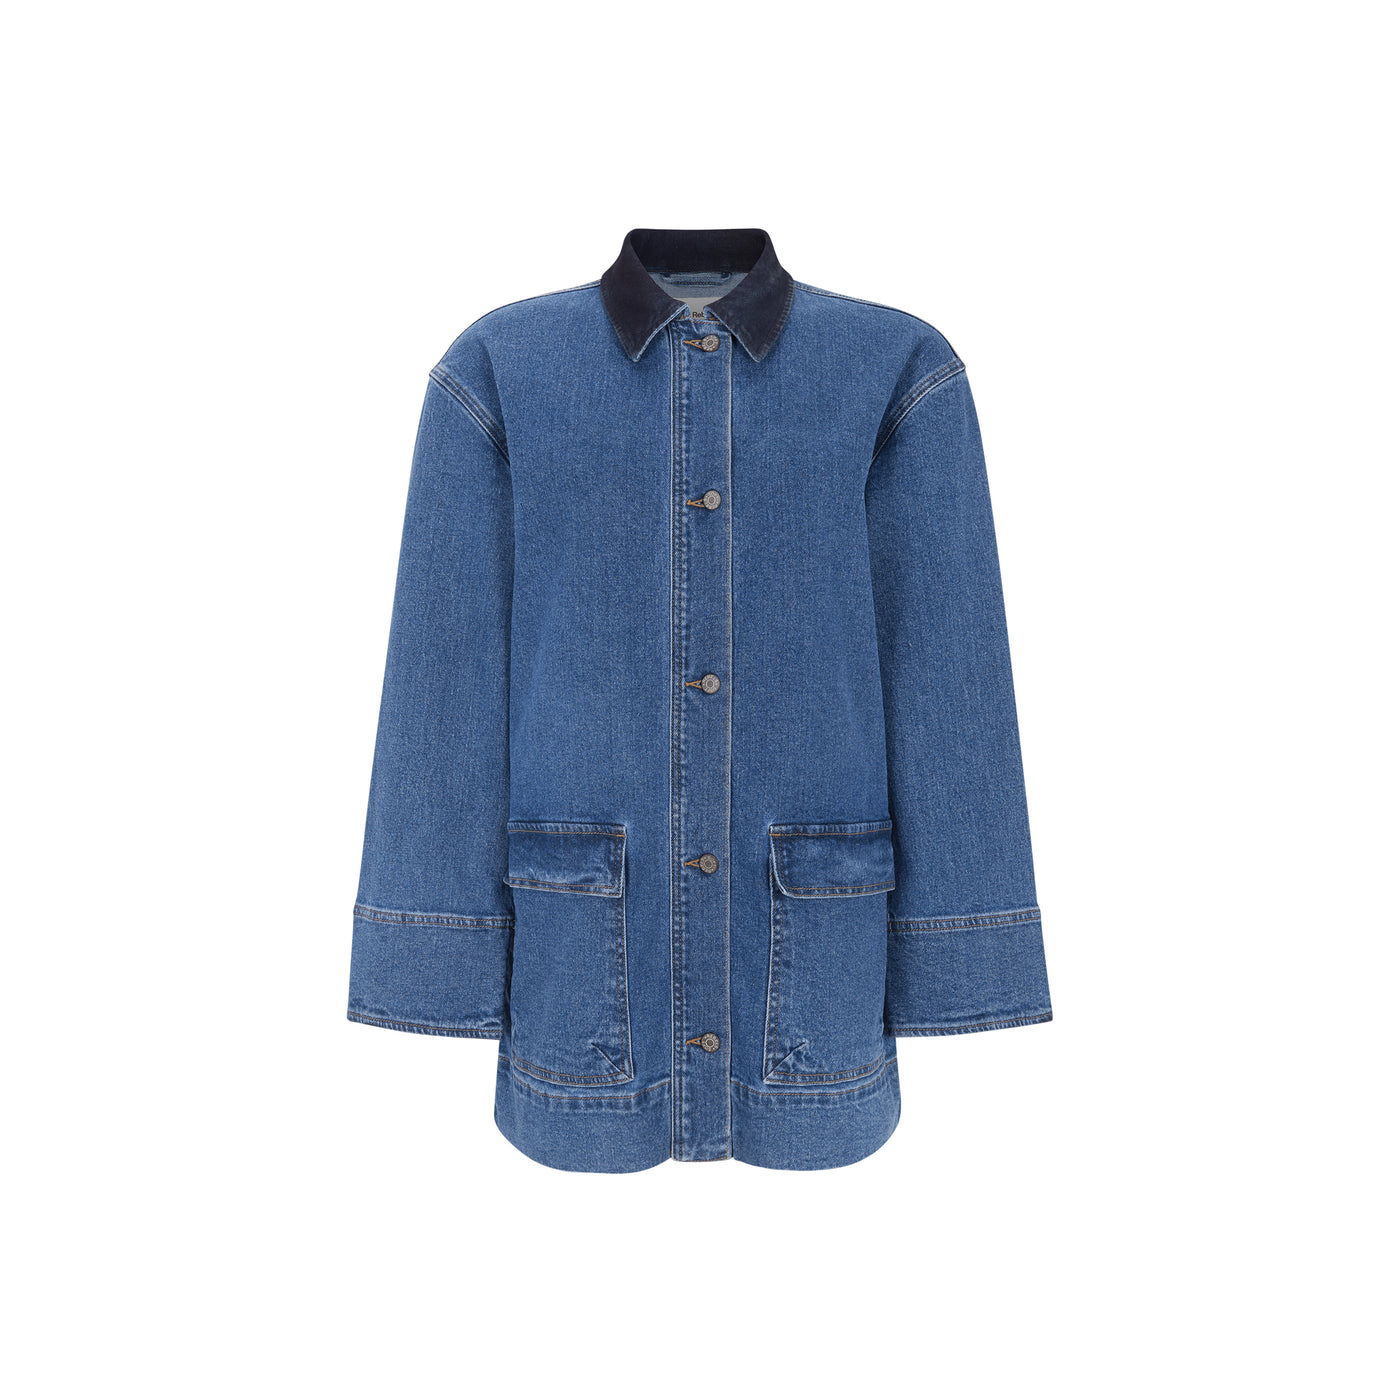 Soft Rebels  SRKiki Denim Jacket Outerwear 430 True blue